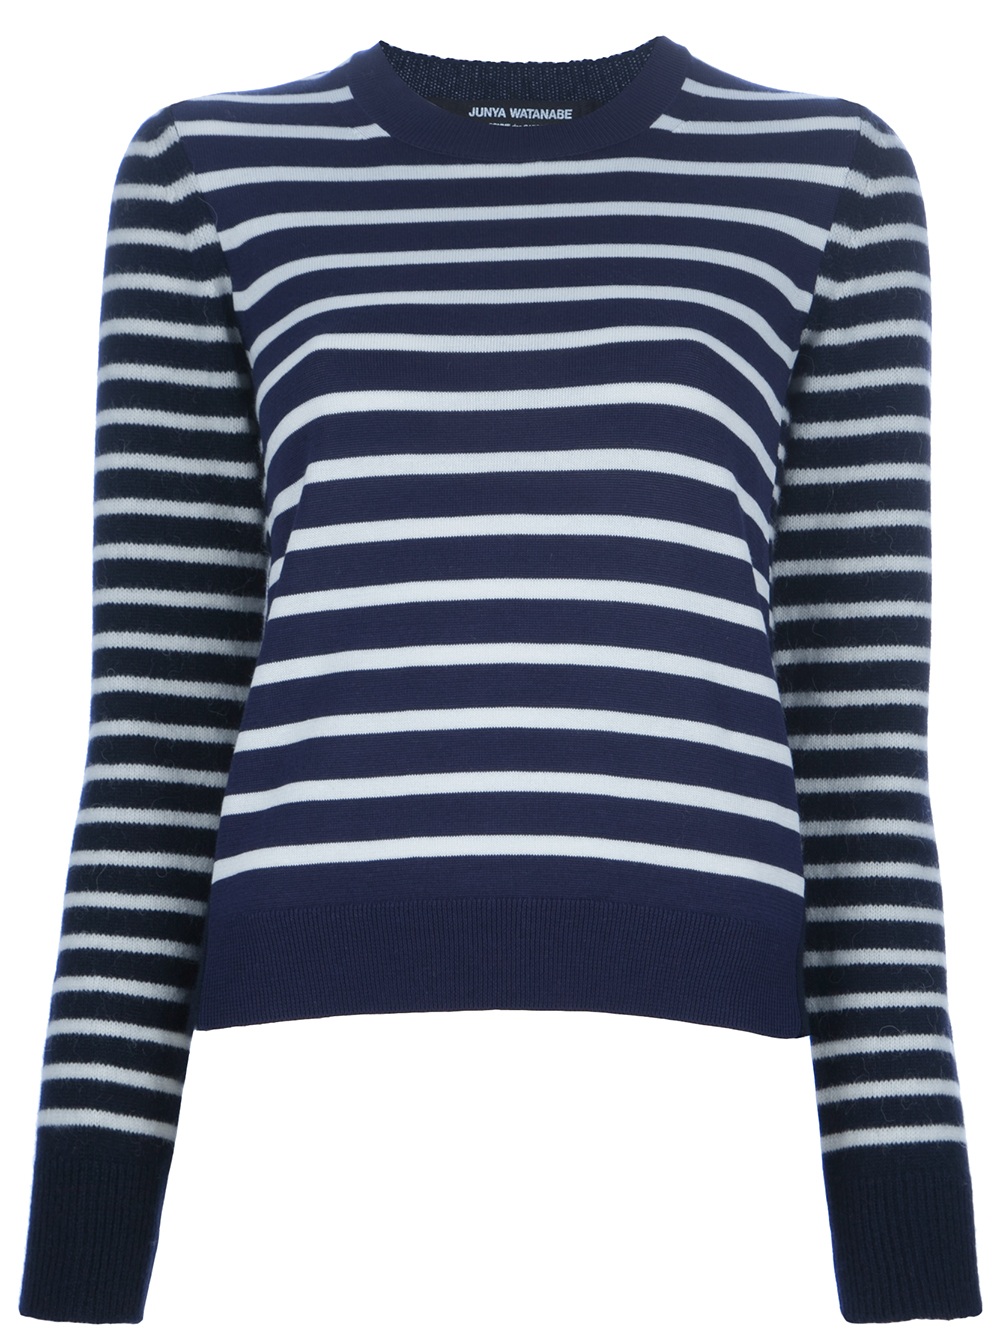 Junya watanabe Striped Sweater in Blue (navy) | Lyst